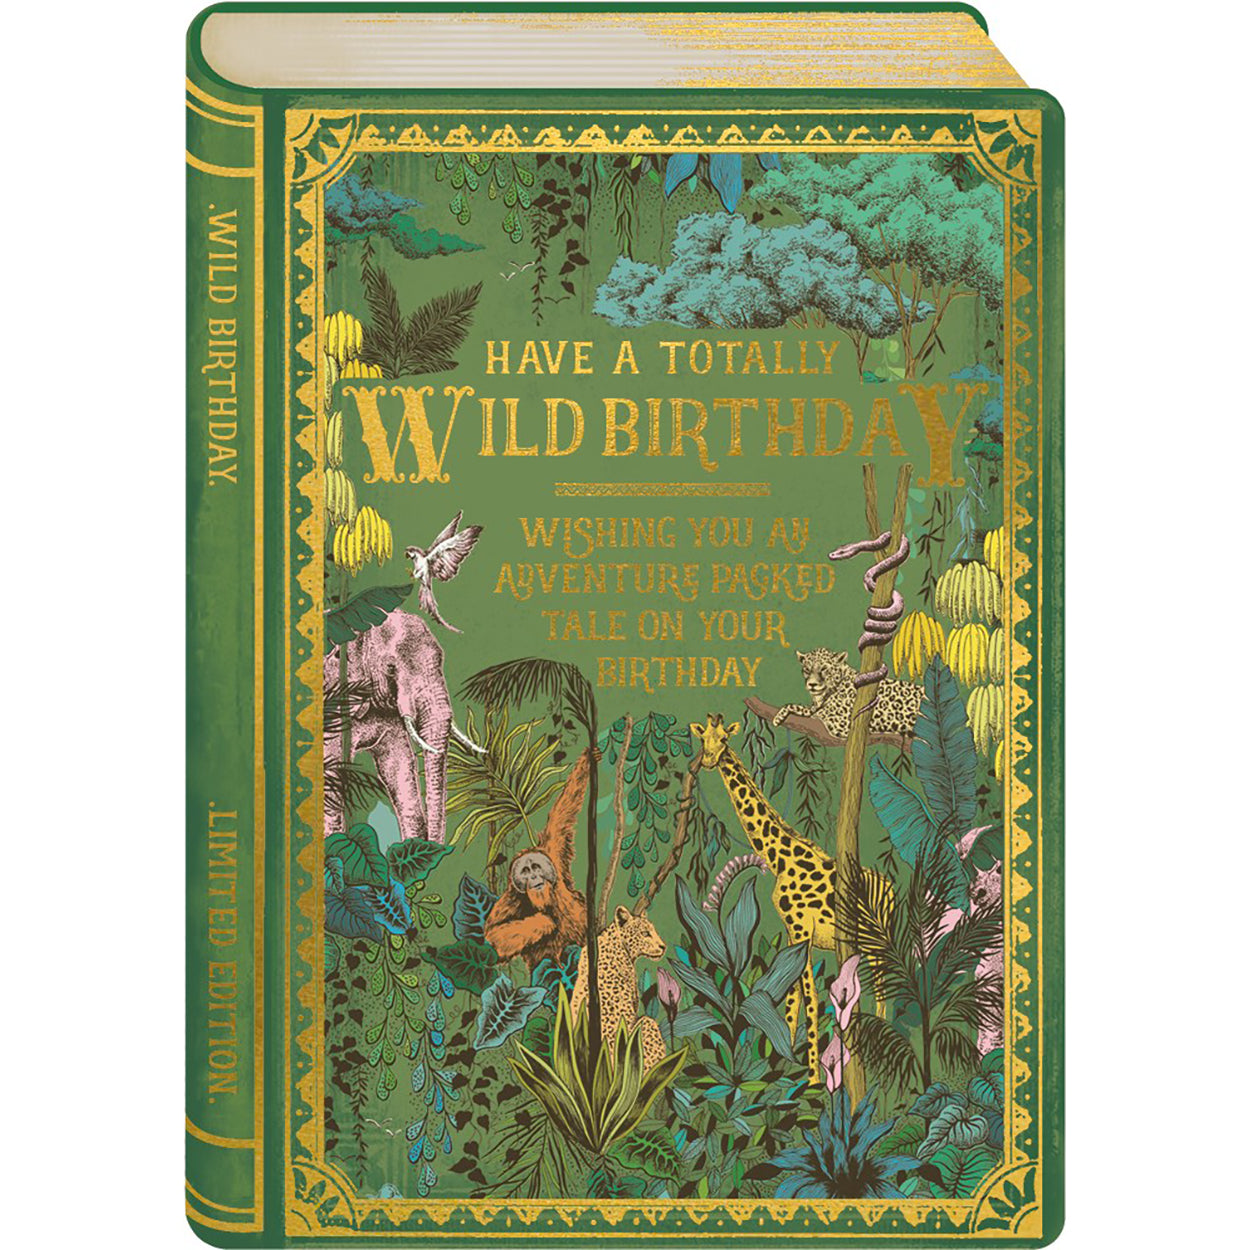 Totally Wild Birthday Card